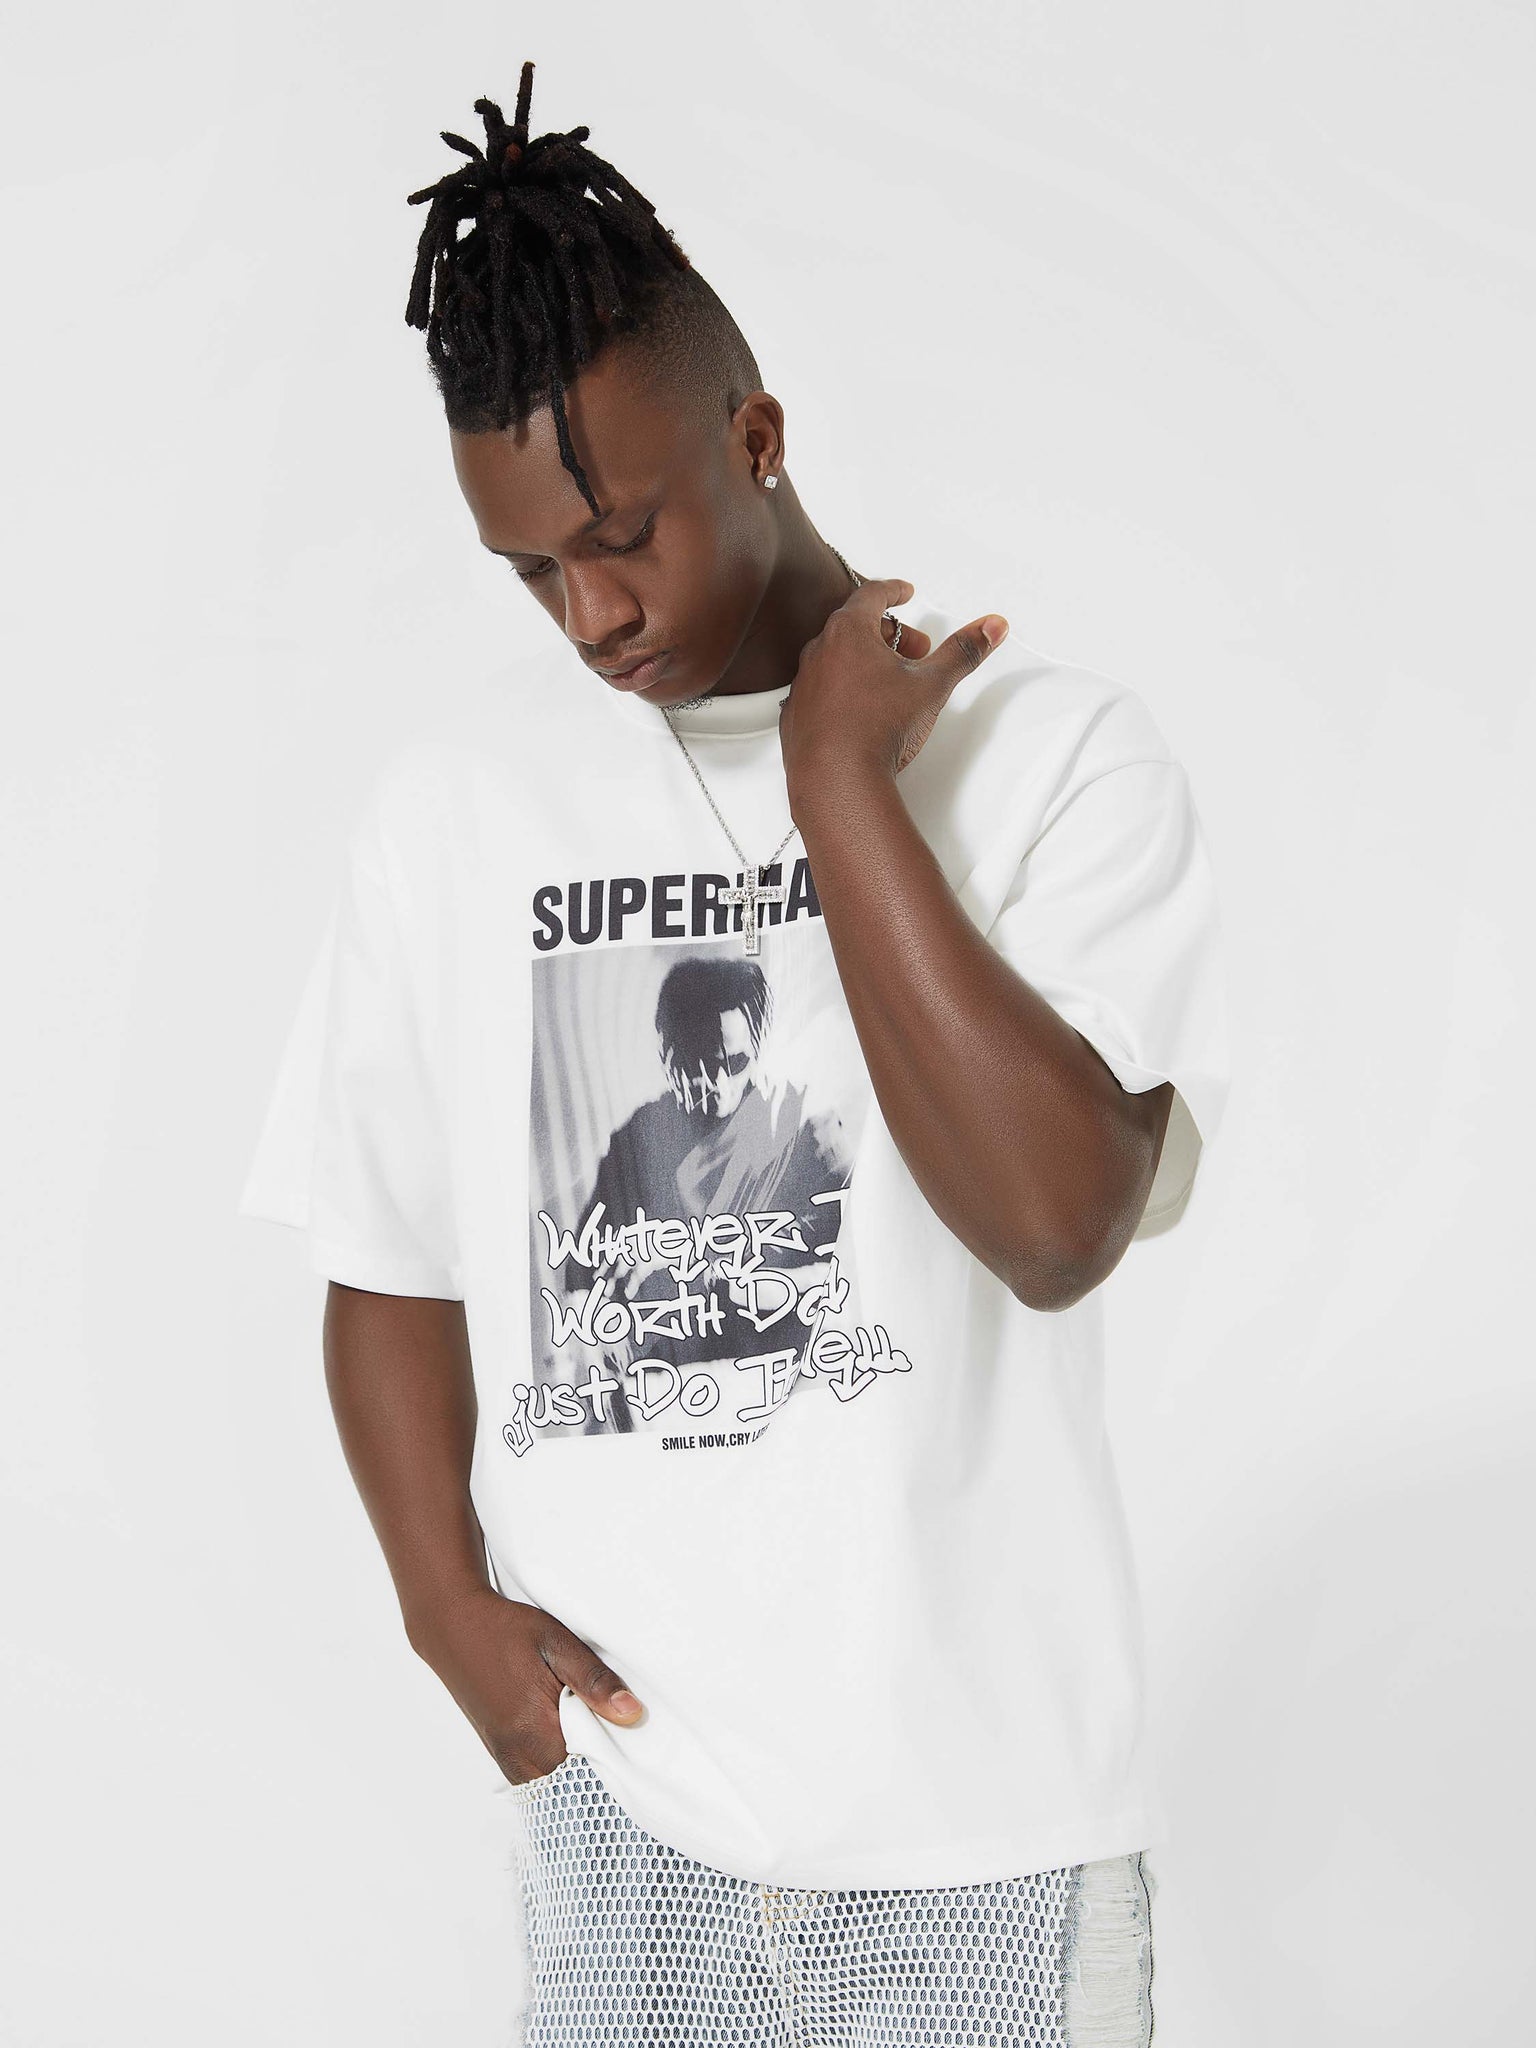 The Supermade Rapper Print T-shirt